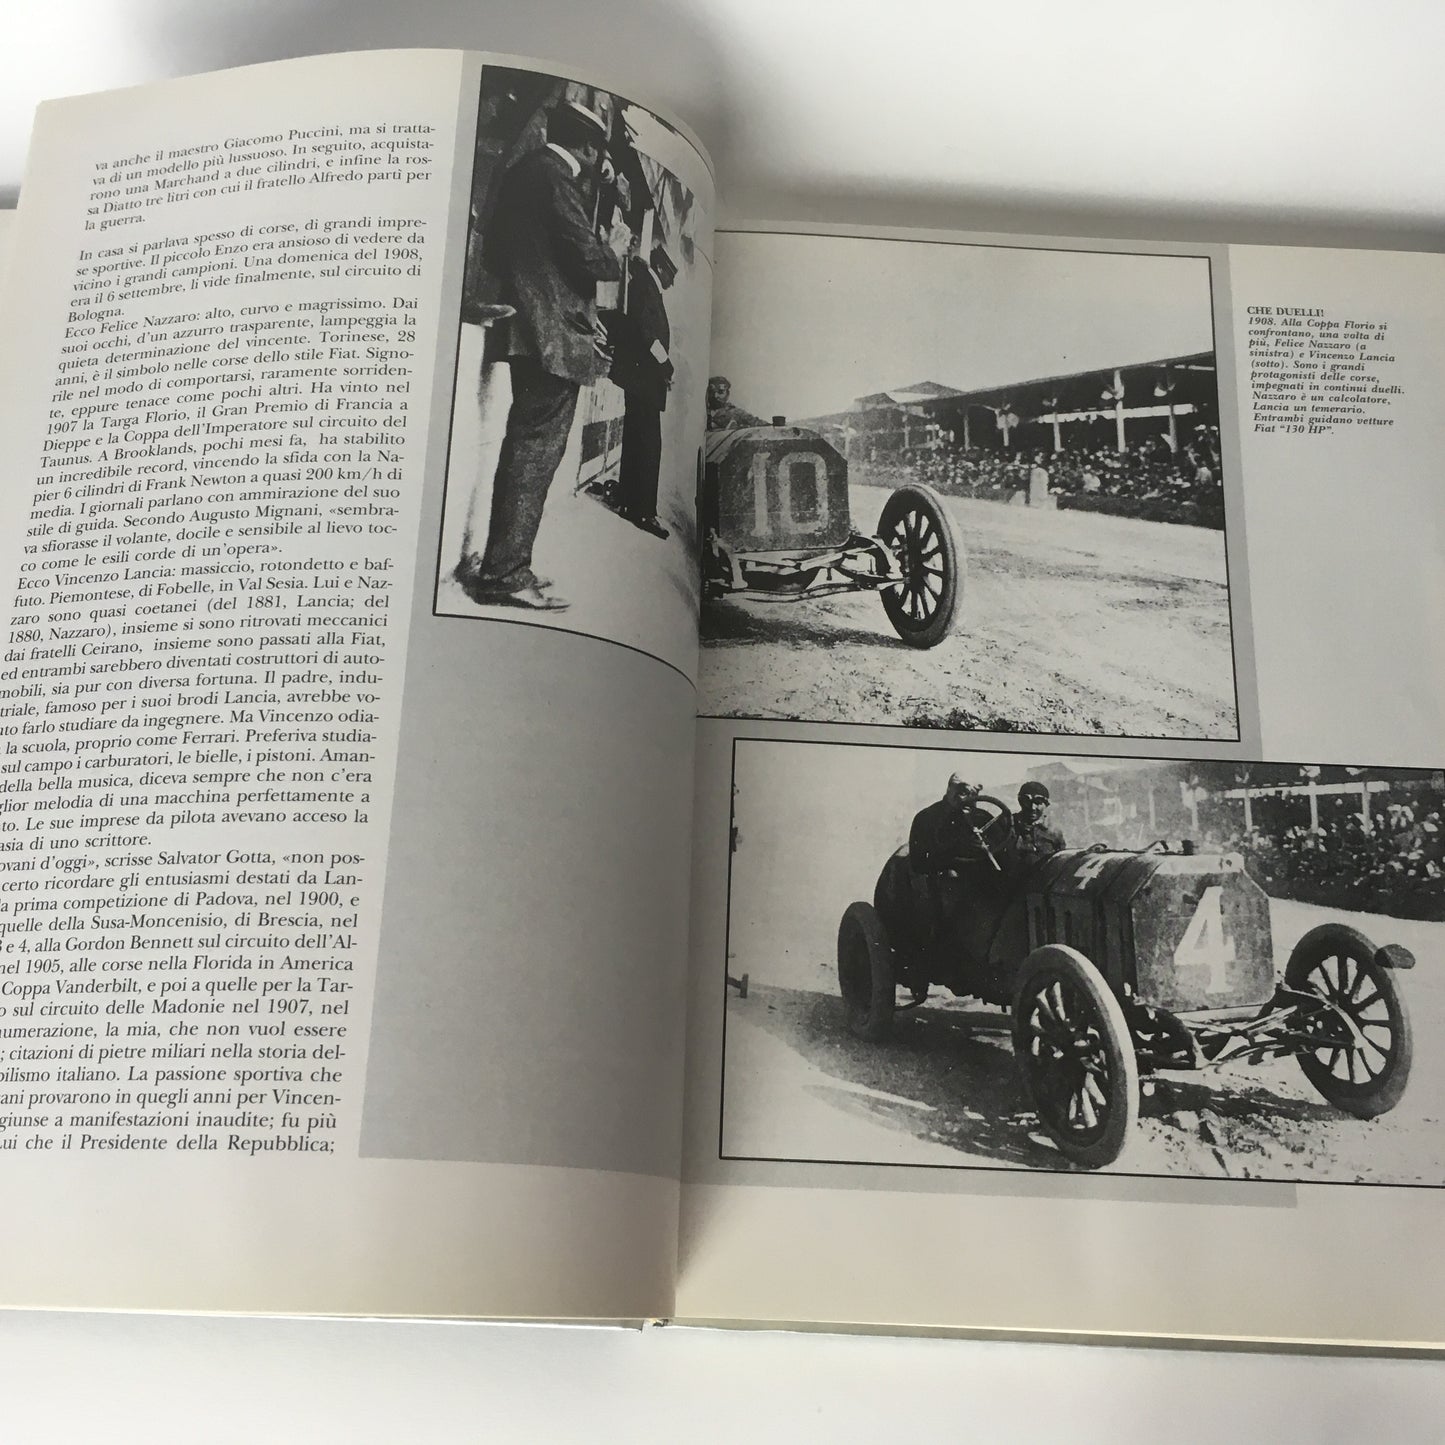 Ferrari, Book The Roaring Races, The True Story of Enzo Ferrari by Giulio Schmidt, ISBN 8876720065